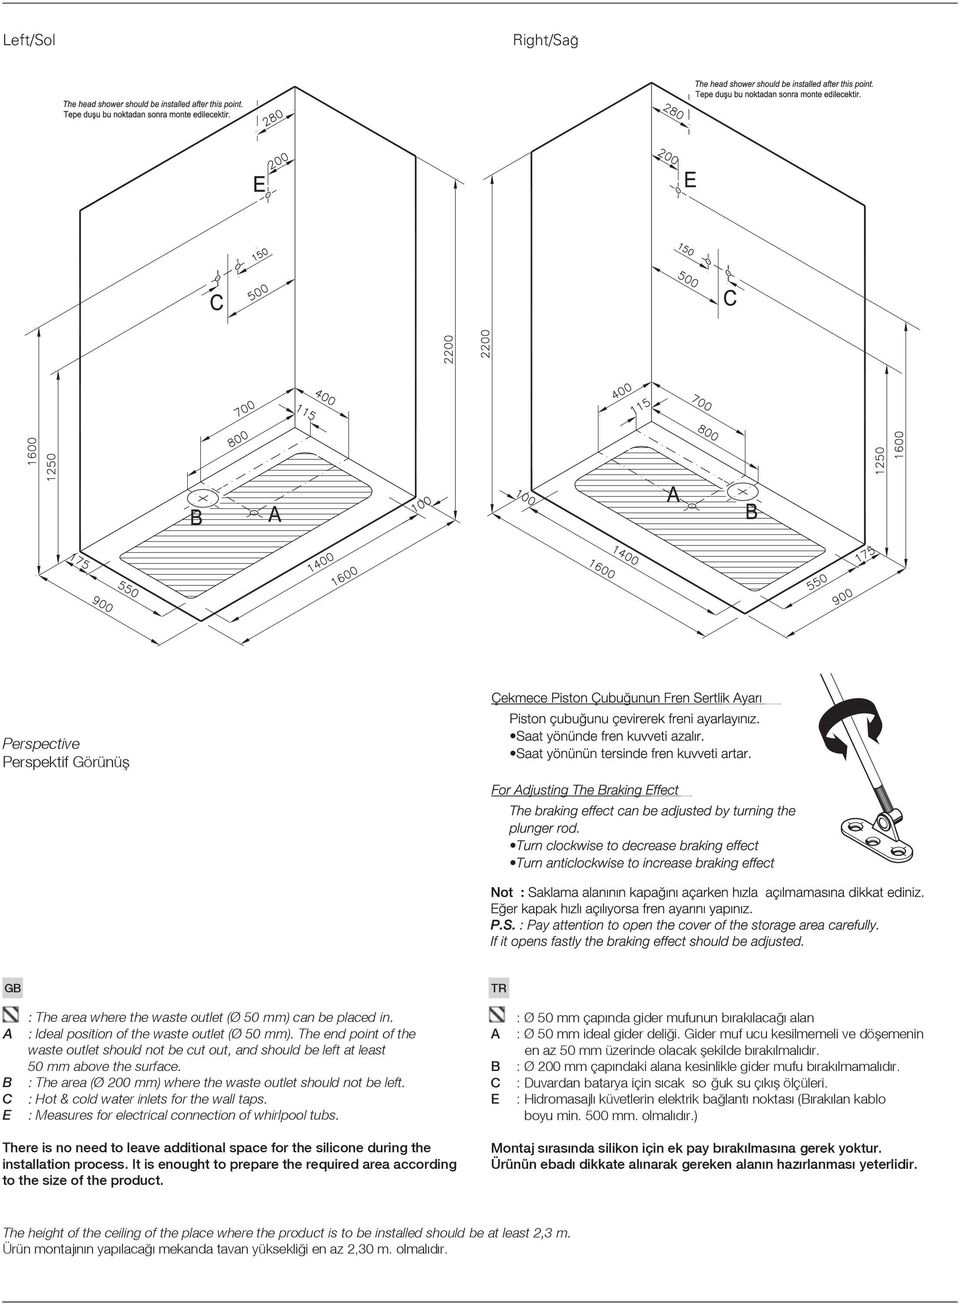 : Hot & cold water inlets for the wall taps. : Measures for electrical connection of whirlpool tubs. A B C E : Ø 50 mm çapında gider mufunun bırakılacağı alan : Ø 50 mm ideal gider deliği.